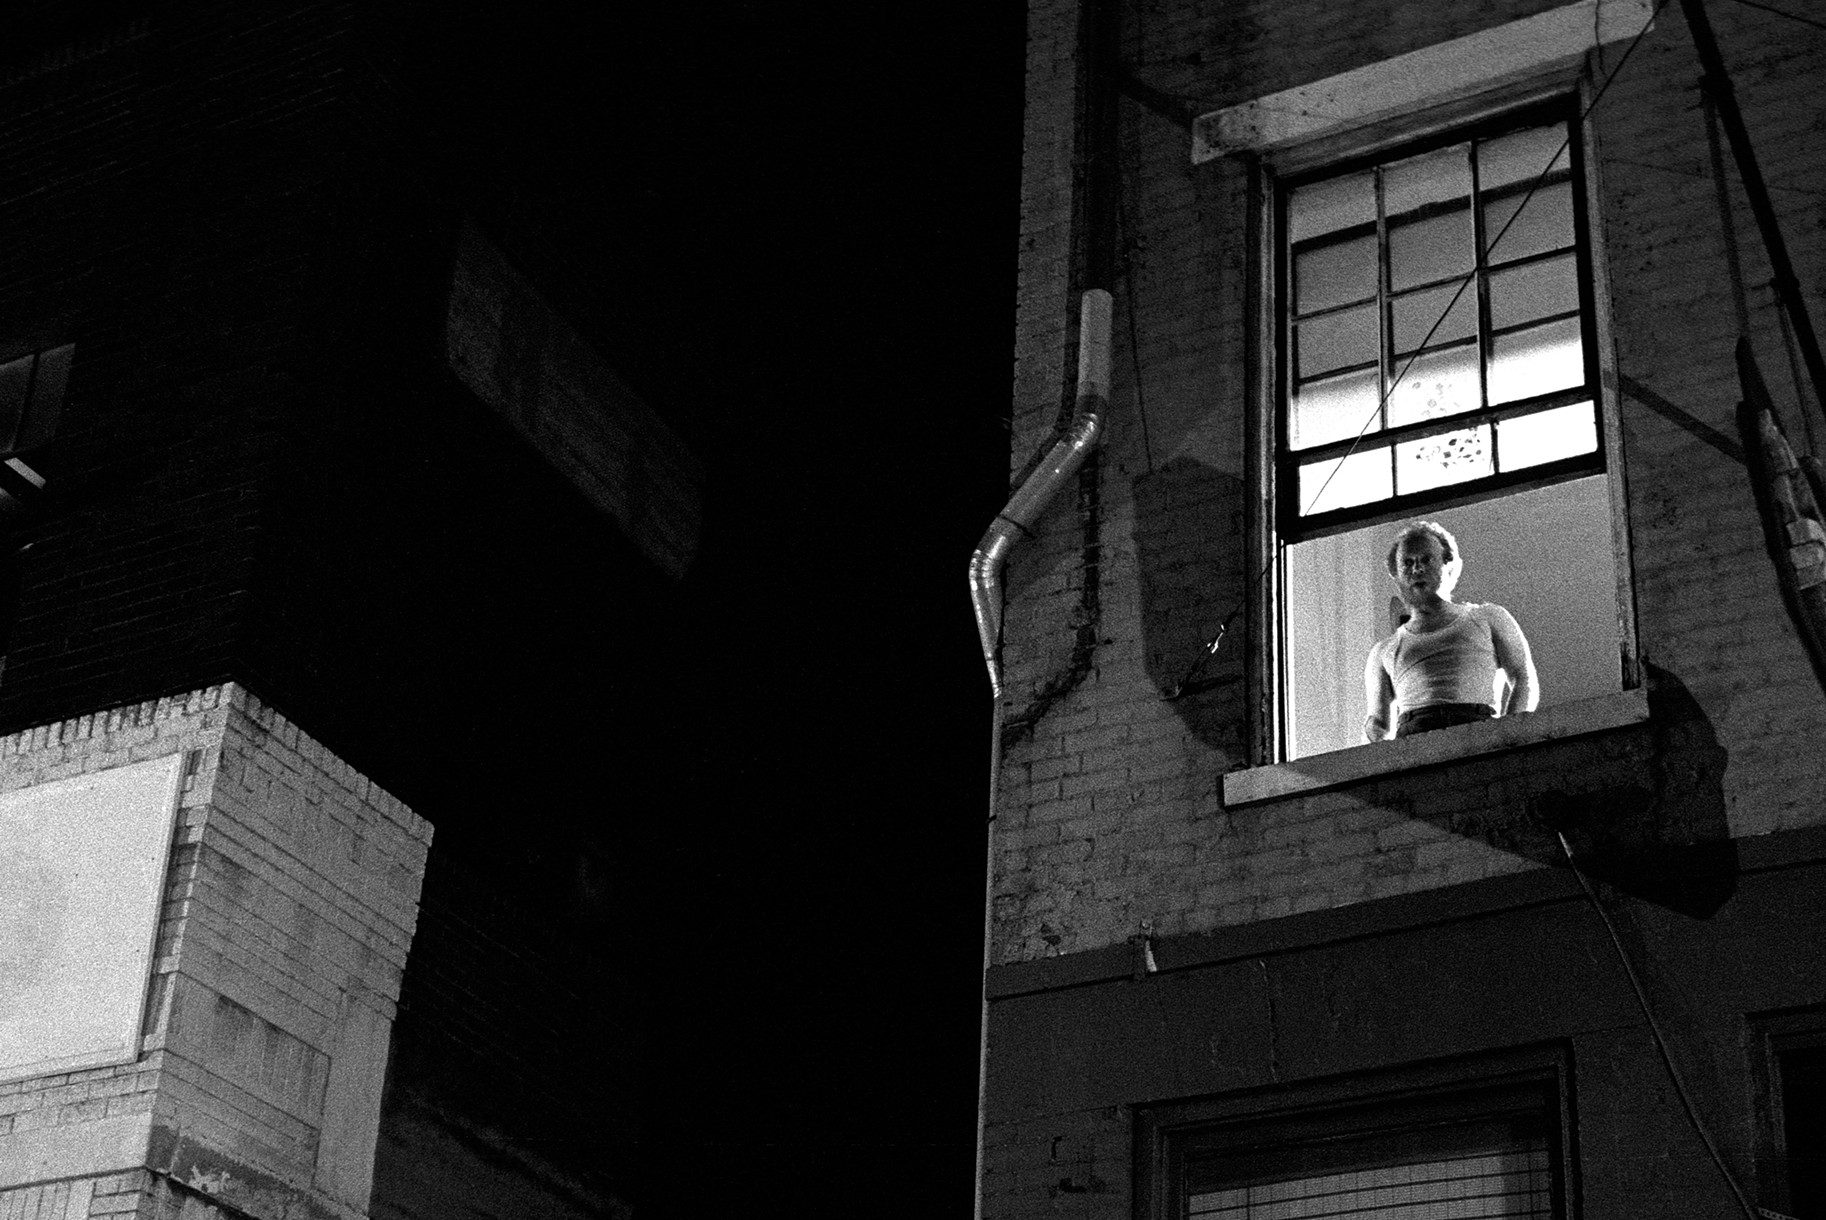 Dark city, Classic film noir, Street photography